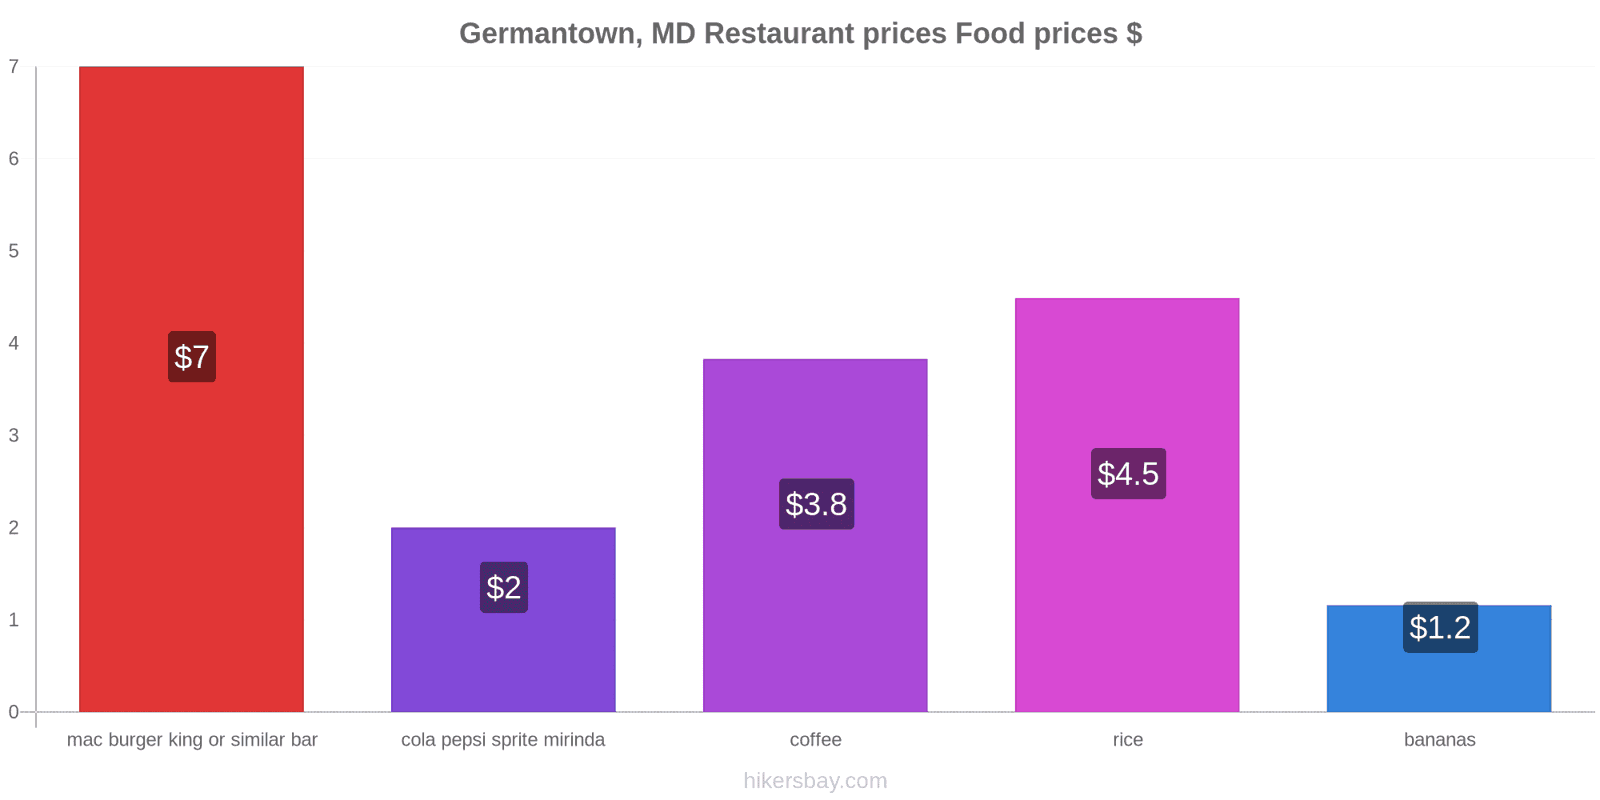 Germantown, MD price changes hikersbay.com